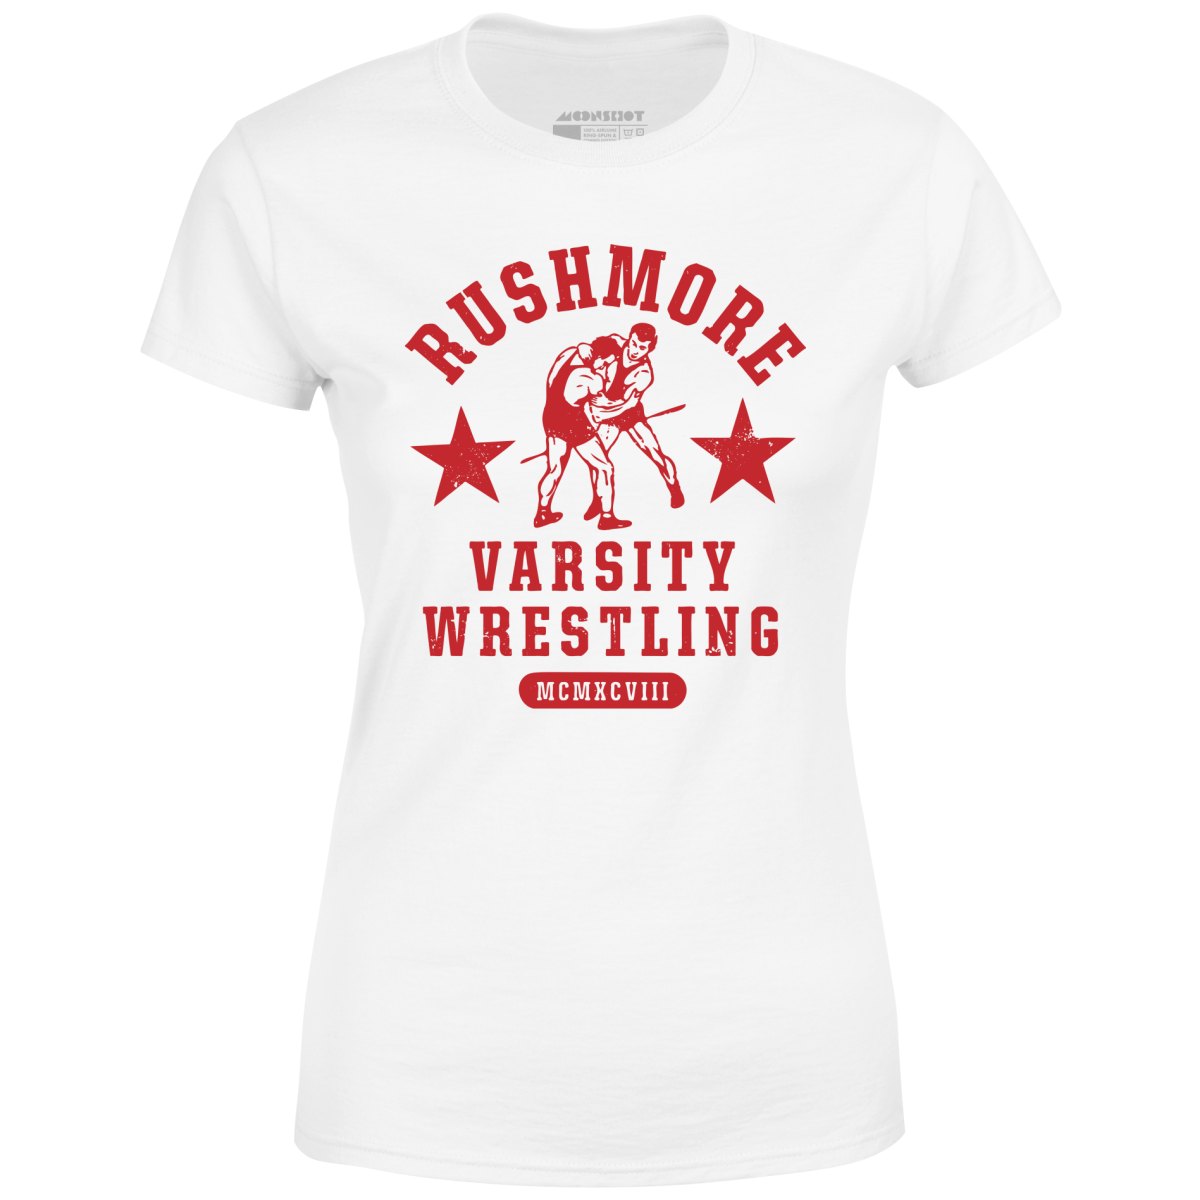 Rushmore Varsity Wrestling - Women's T-Shirt